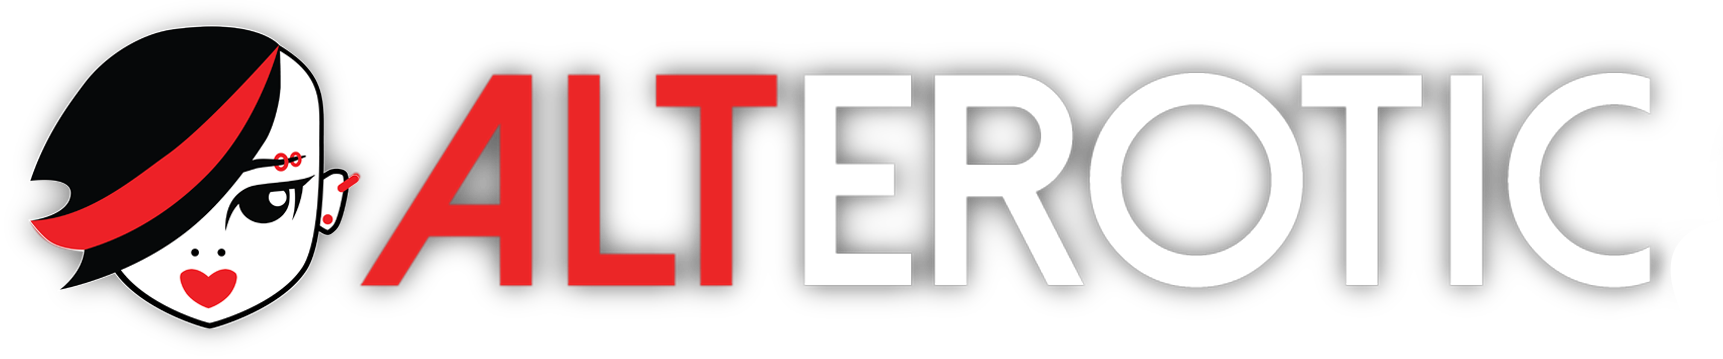 Alterotic Logo